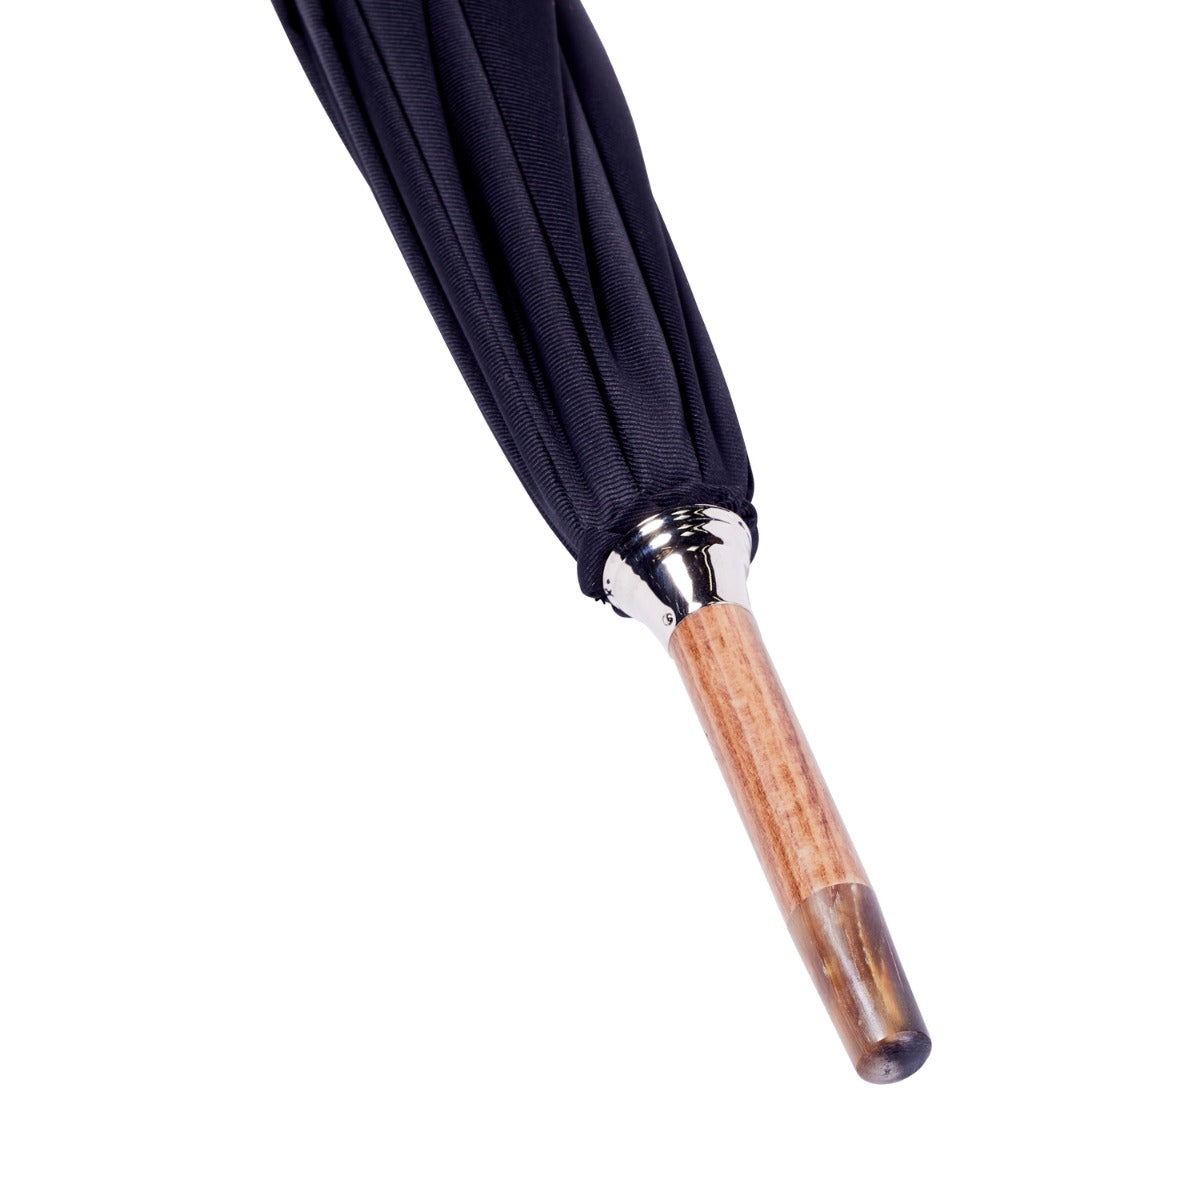 A KirbyAllison.com Bamboo Handle Umbrella with a black canopy.